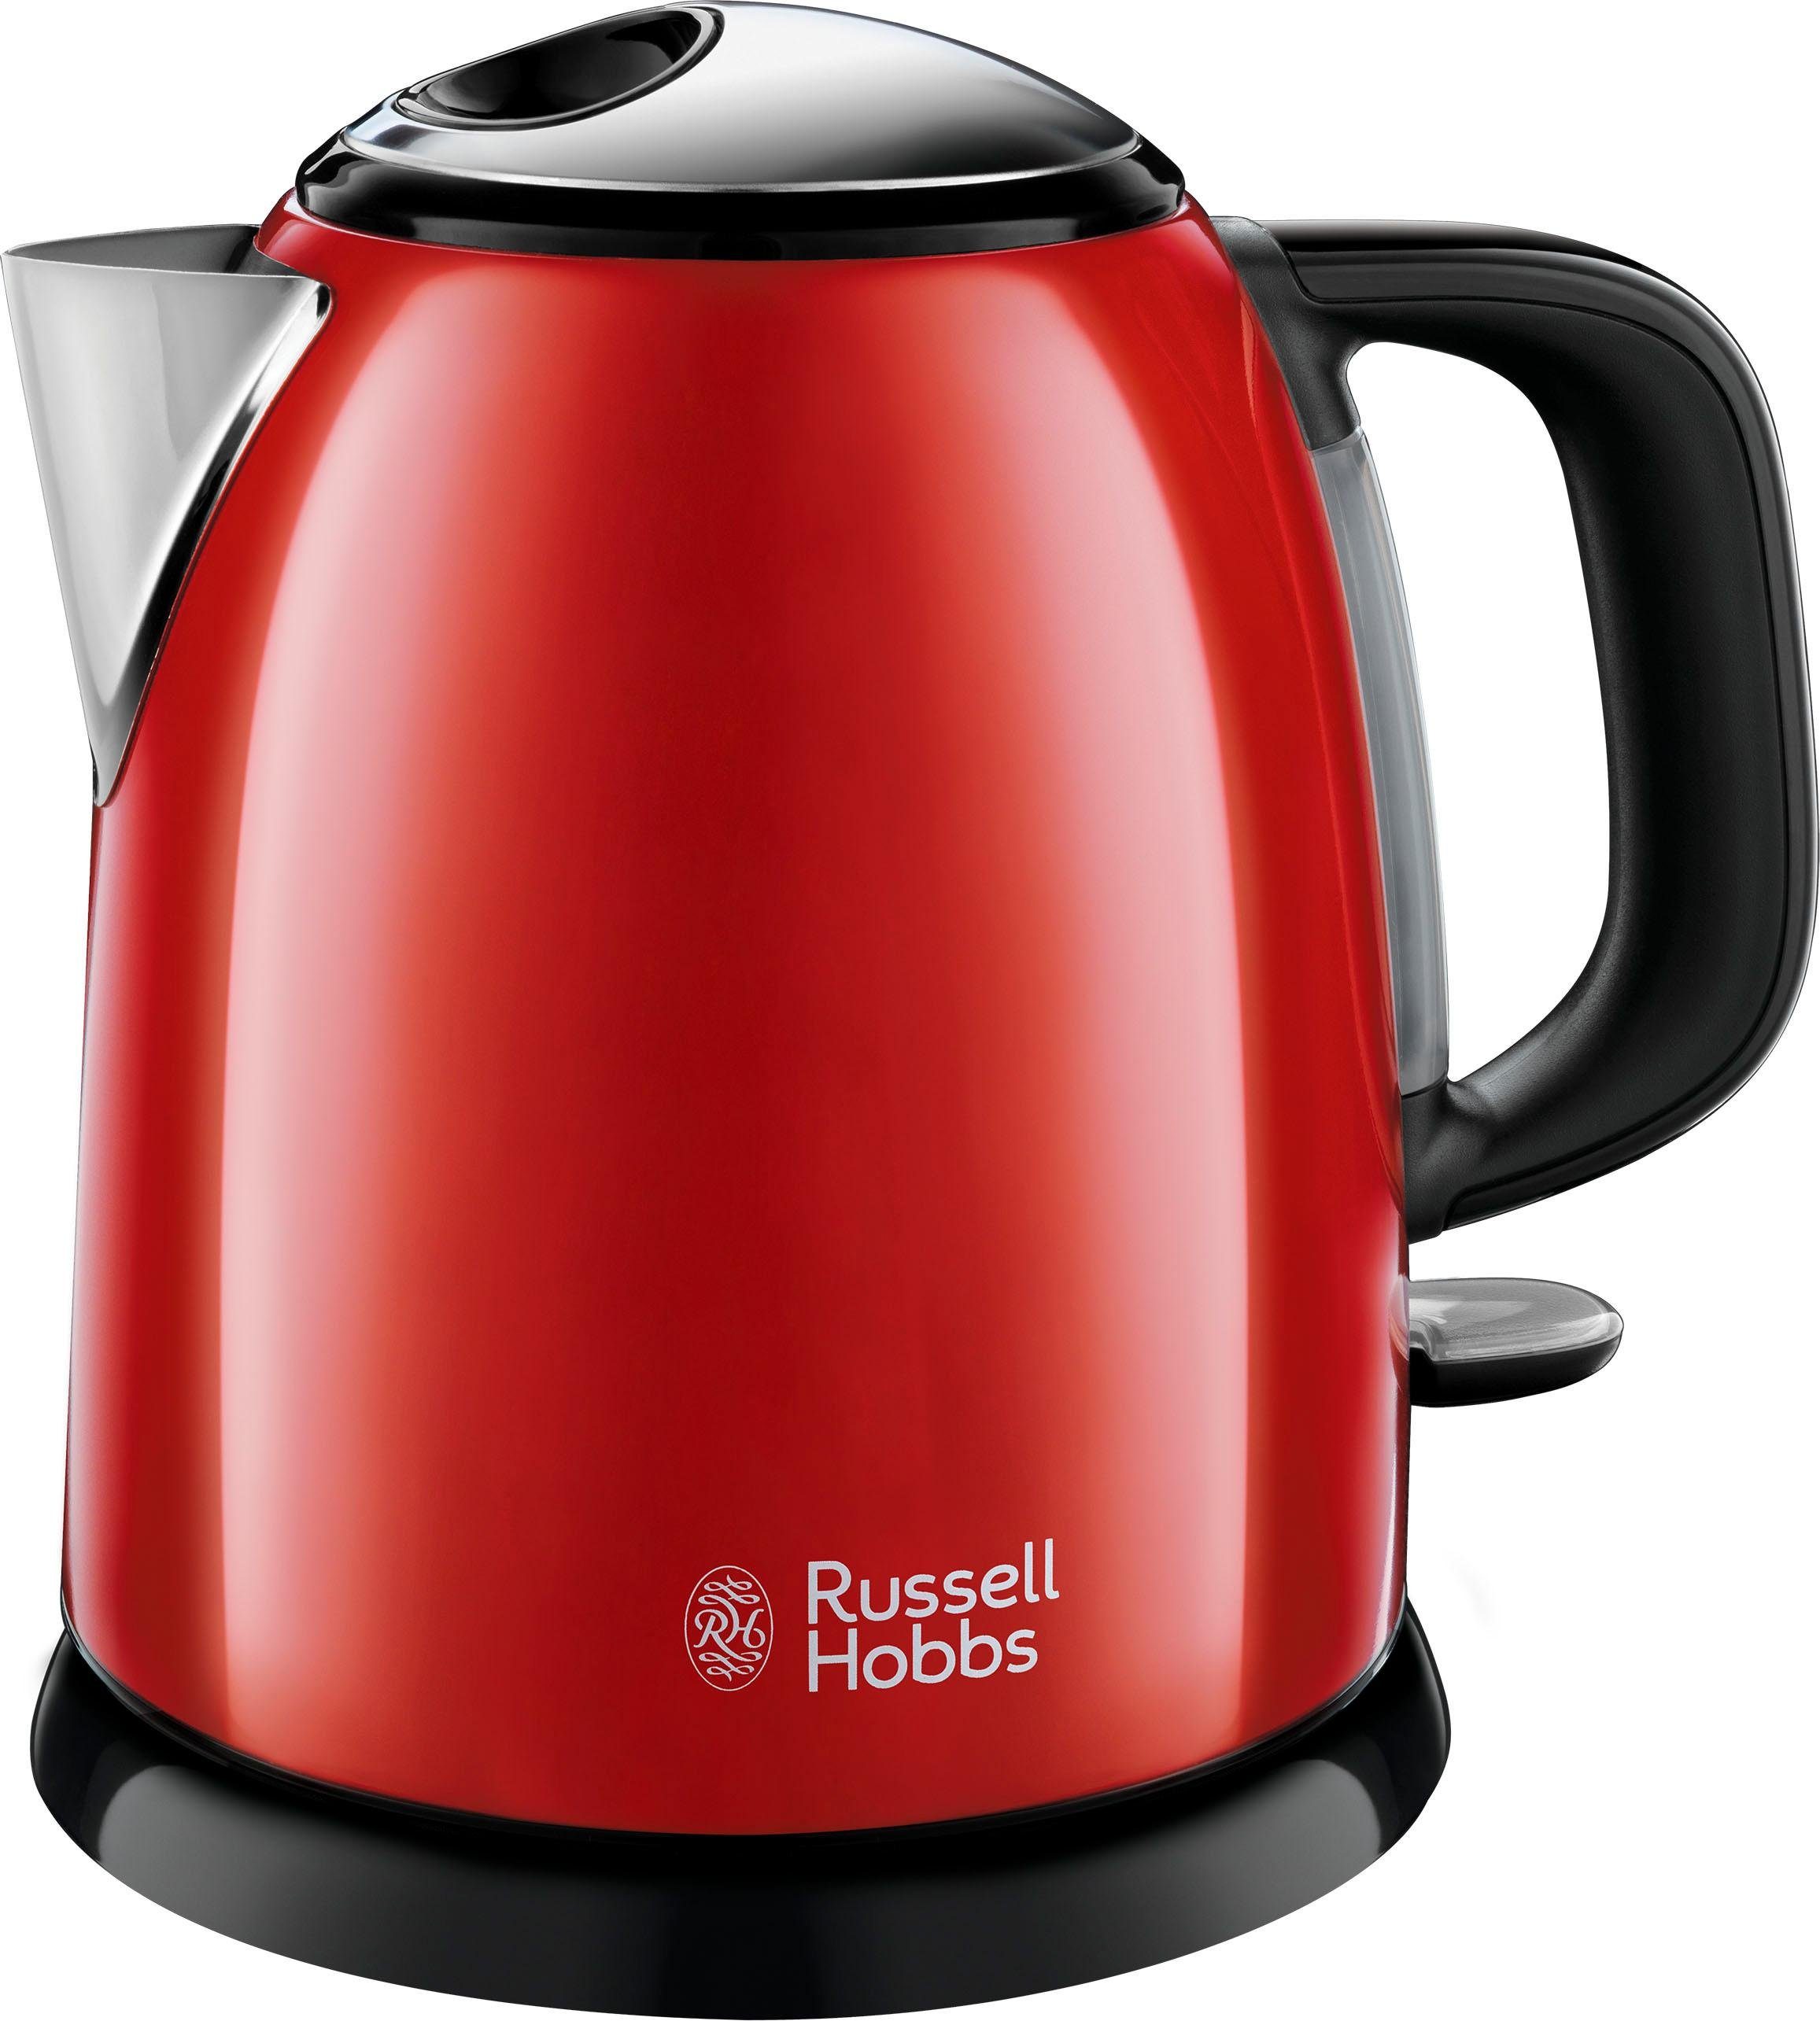 RUSSELL HOBBS Wasserkocher Colours Plus rot 24992-70, 1 l, 2400 W Red | Wasserkocher